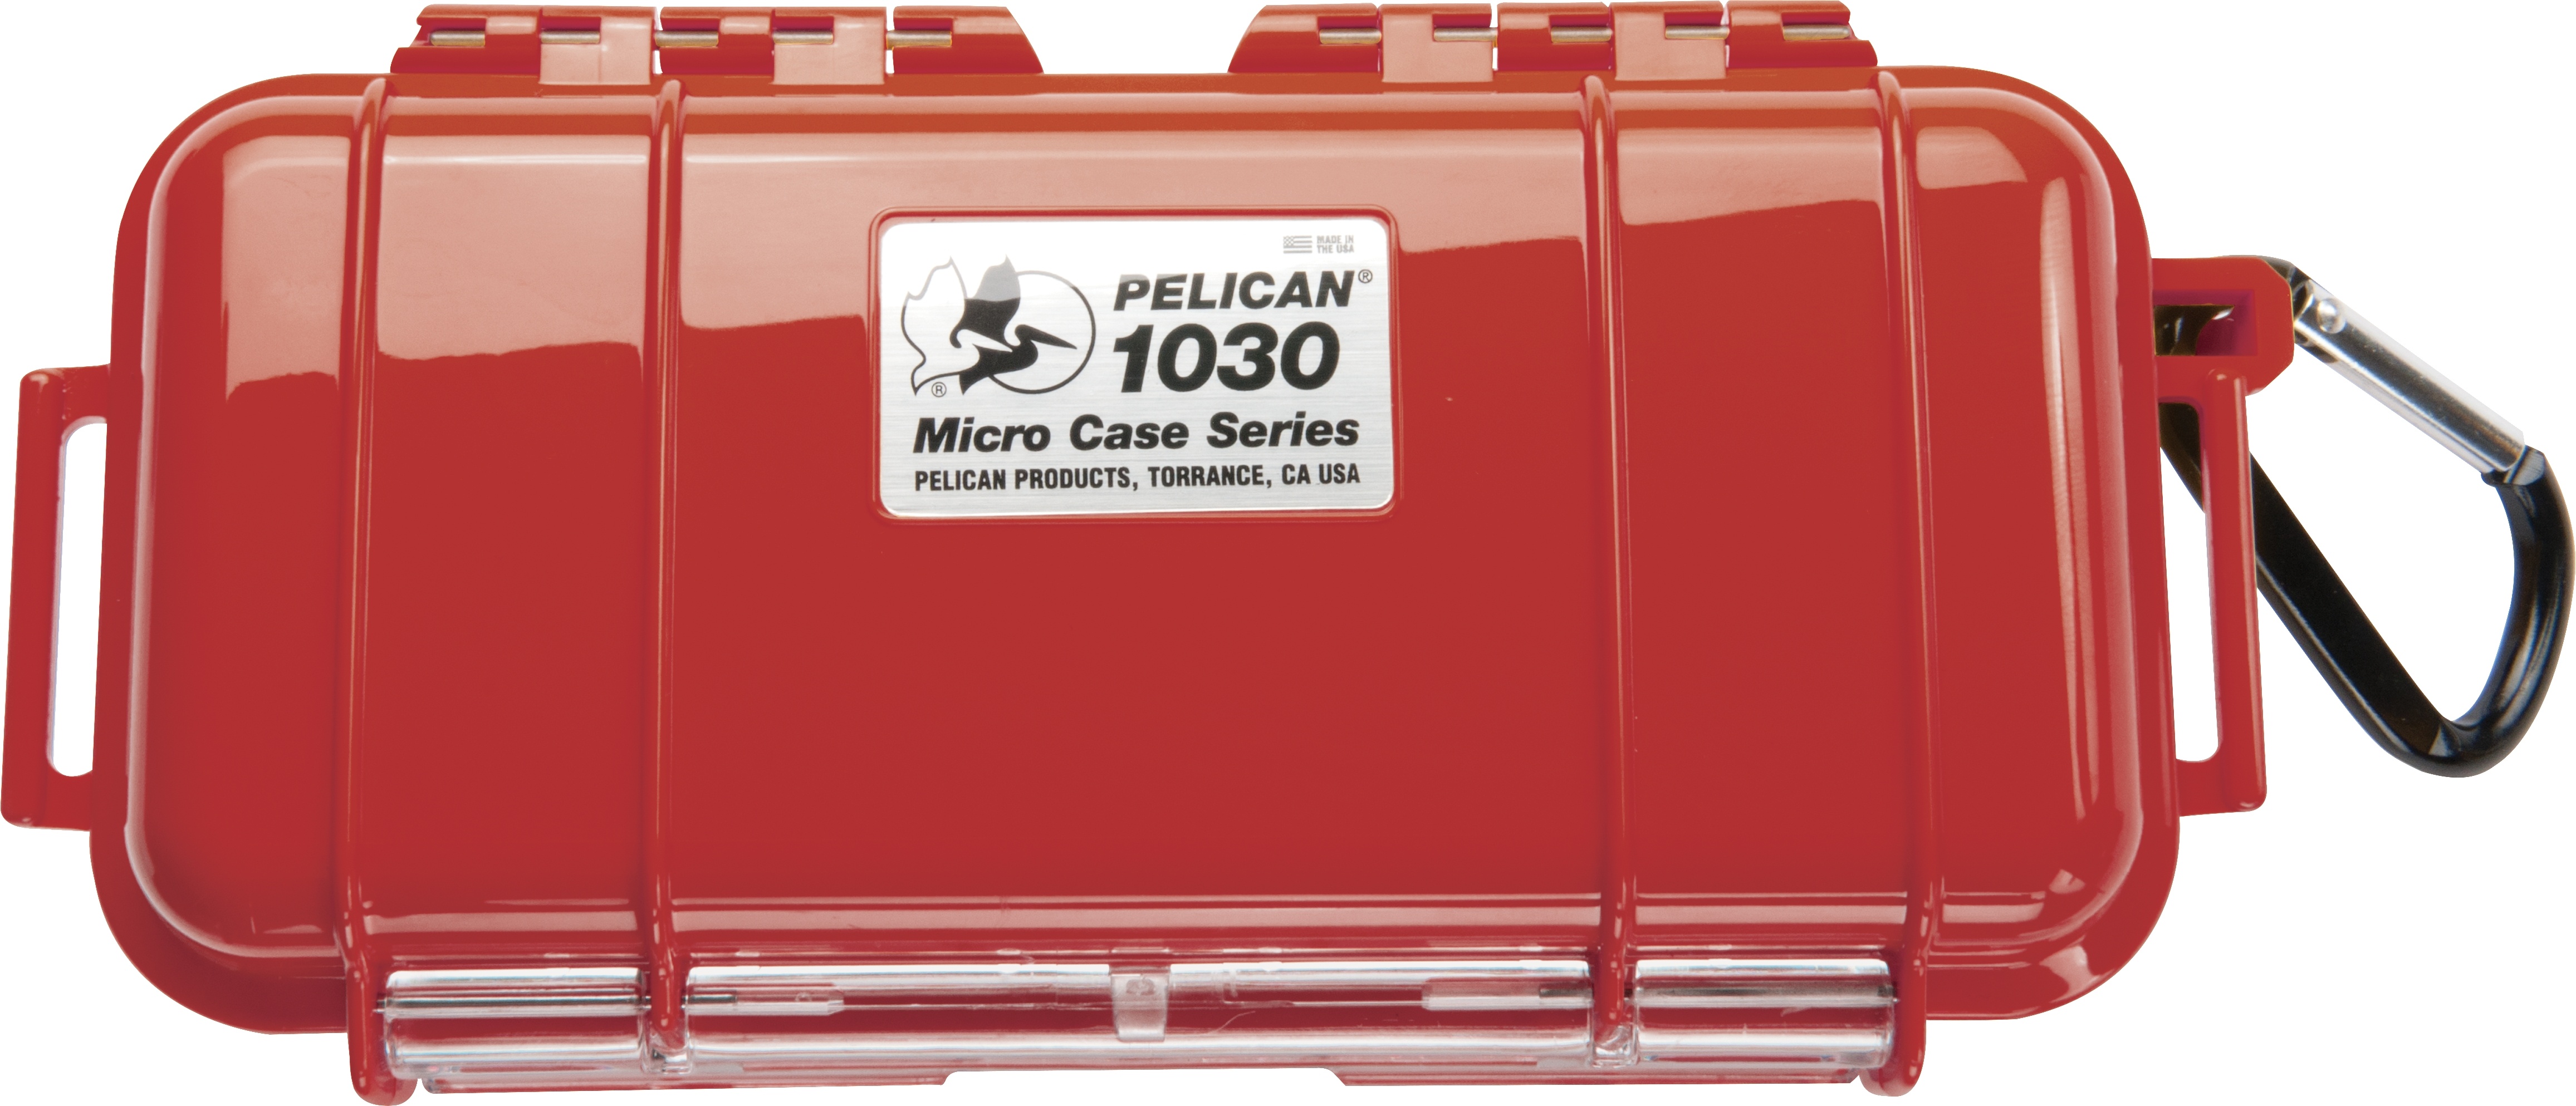 Pelican 1030 Micro Case (Red)